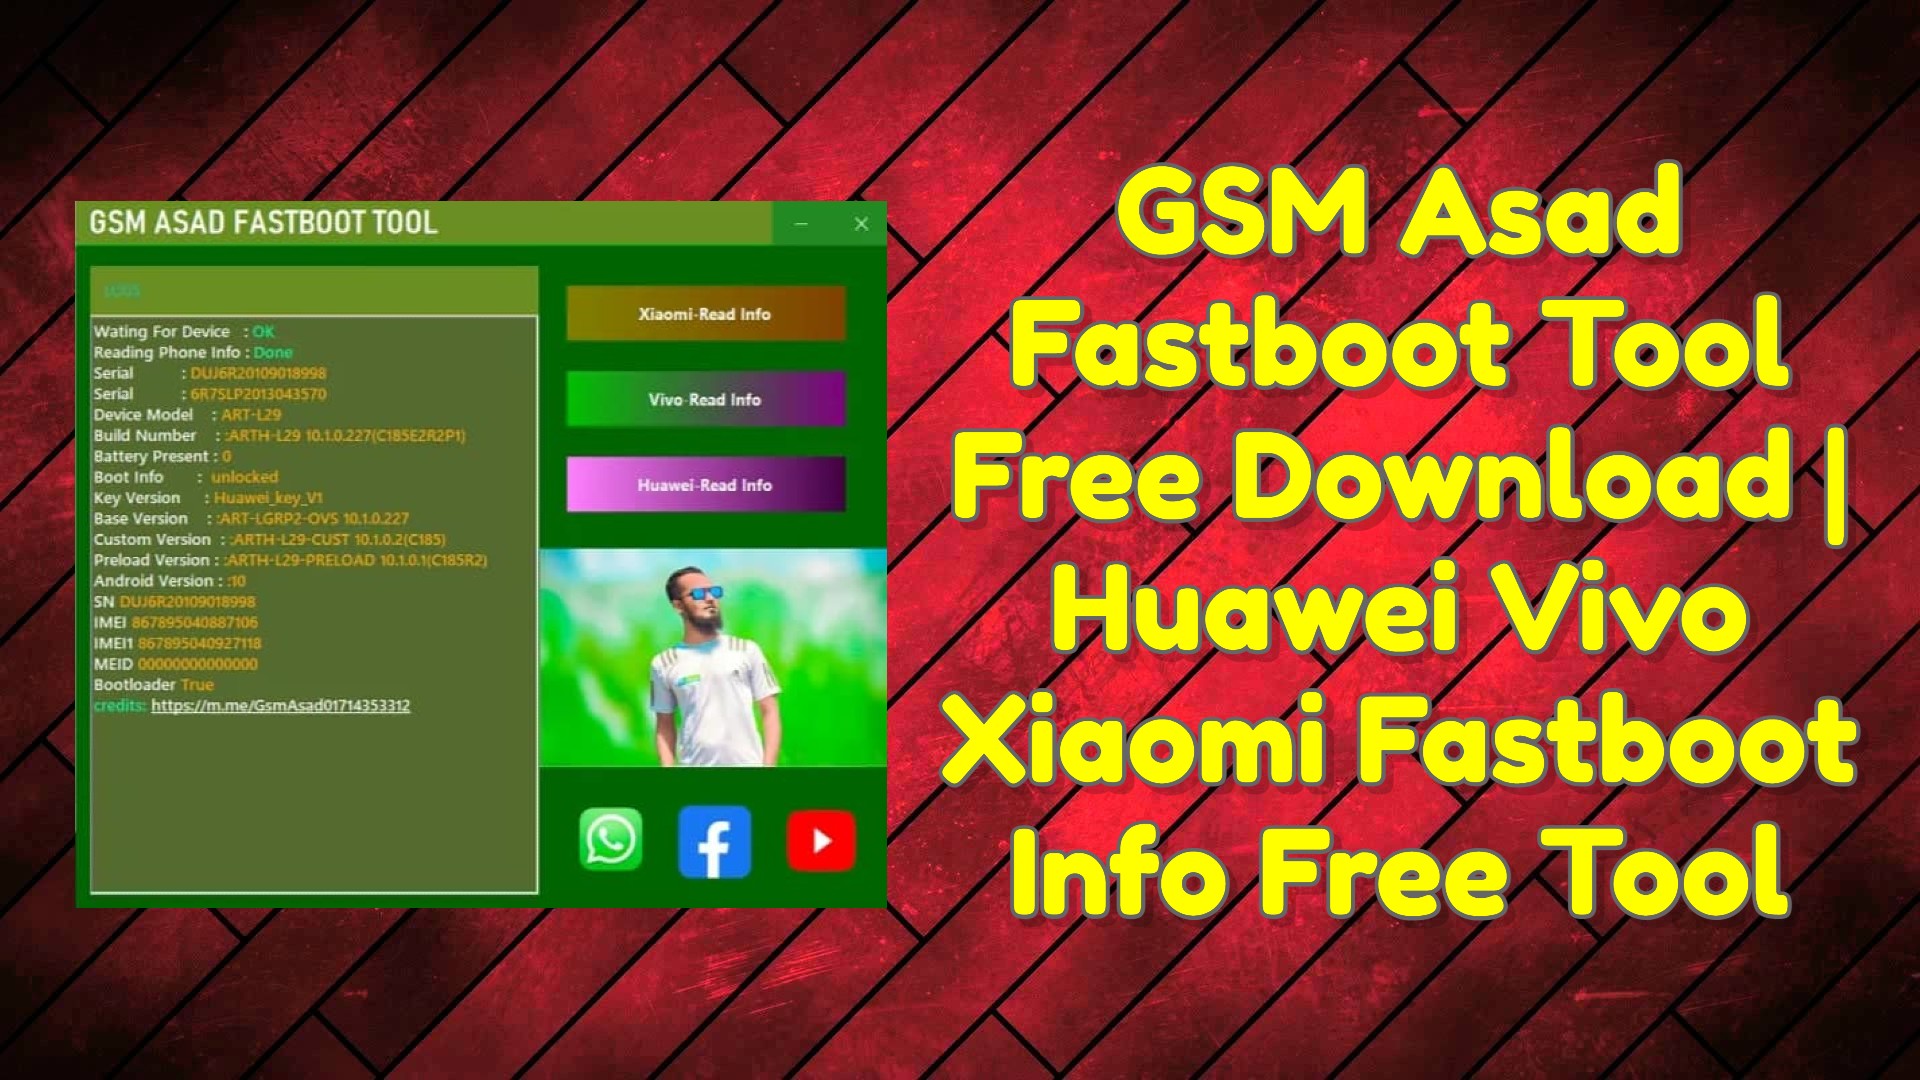 GSM Asad Fastboot Tool Free Download _ Huawei Vivo Xiaomi Fastboot Info Free Tool